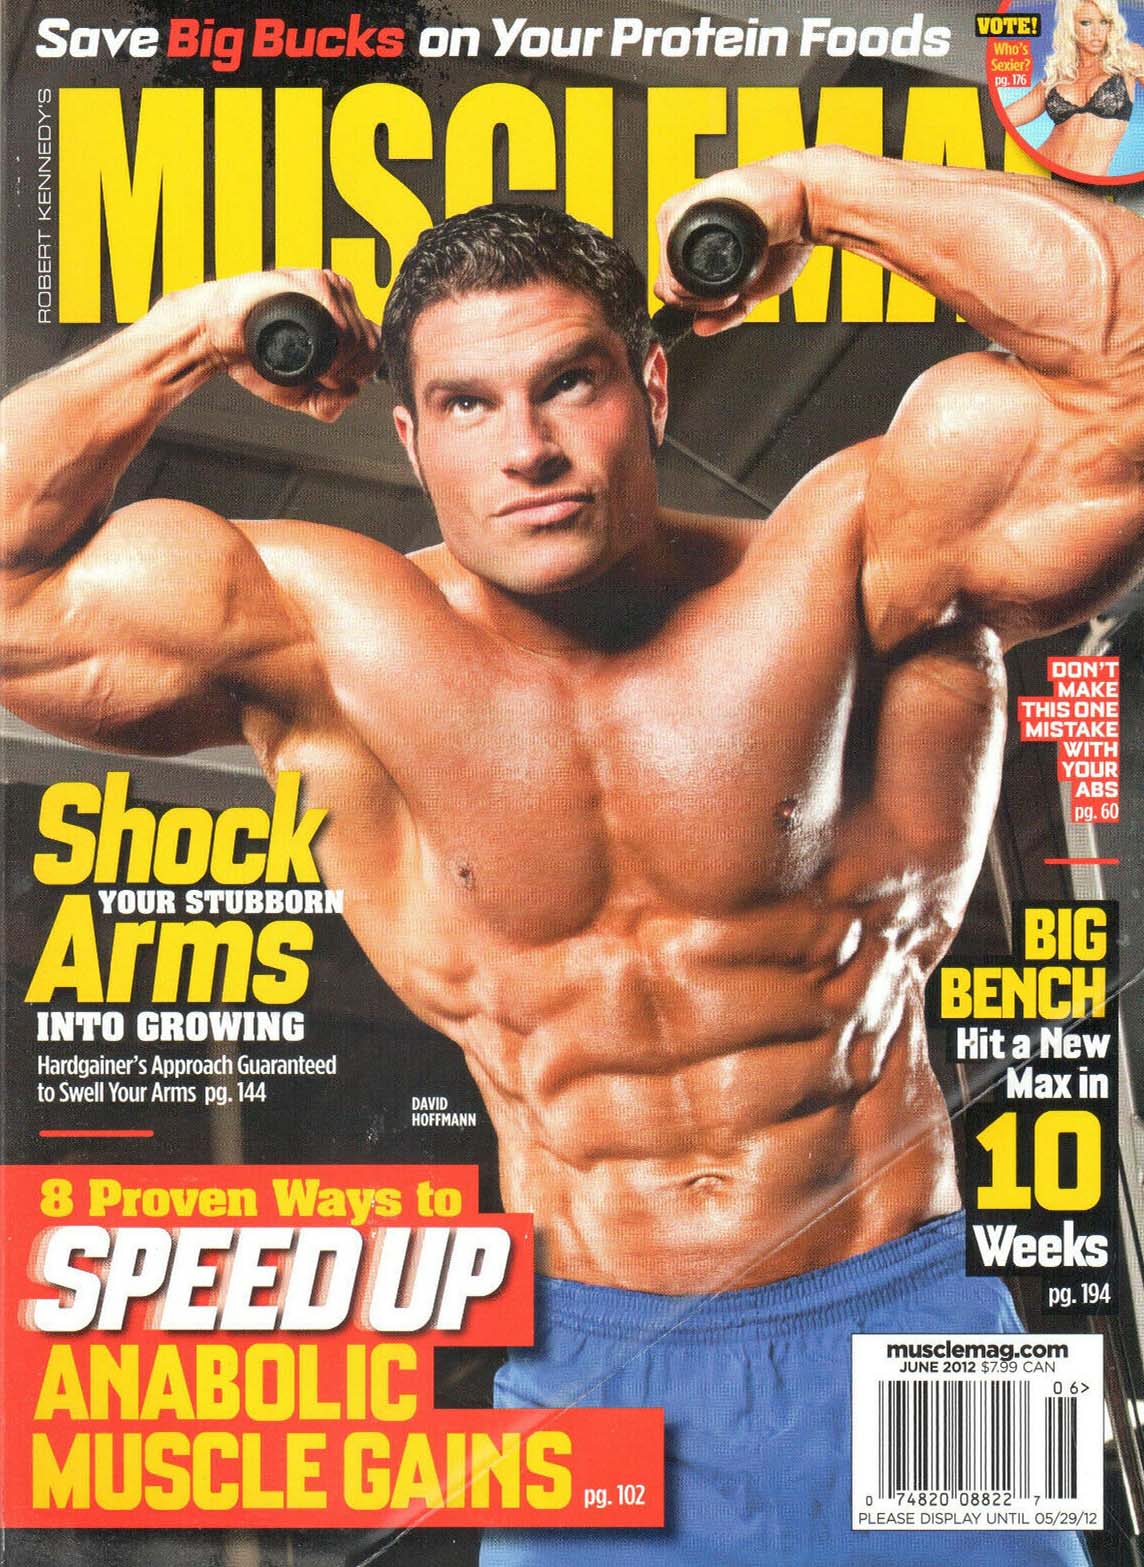 Muscle Jun 2012 magazine reviews